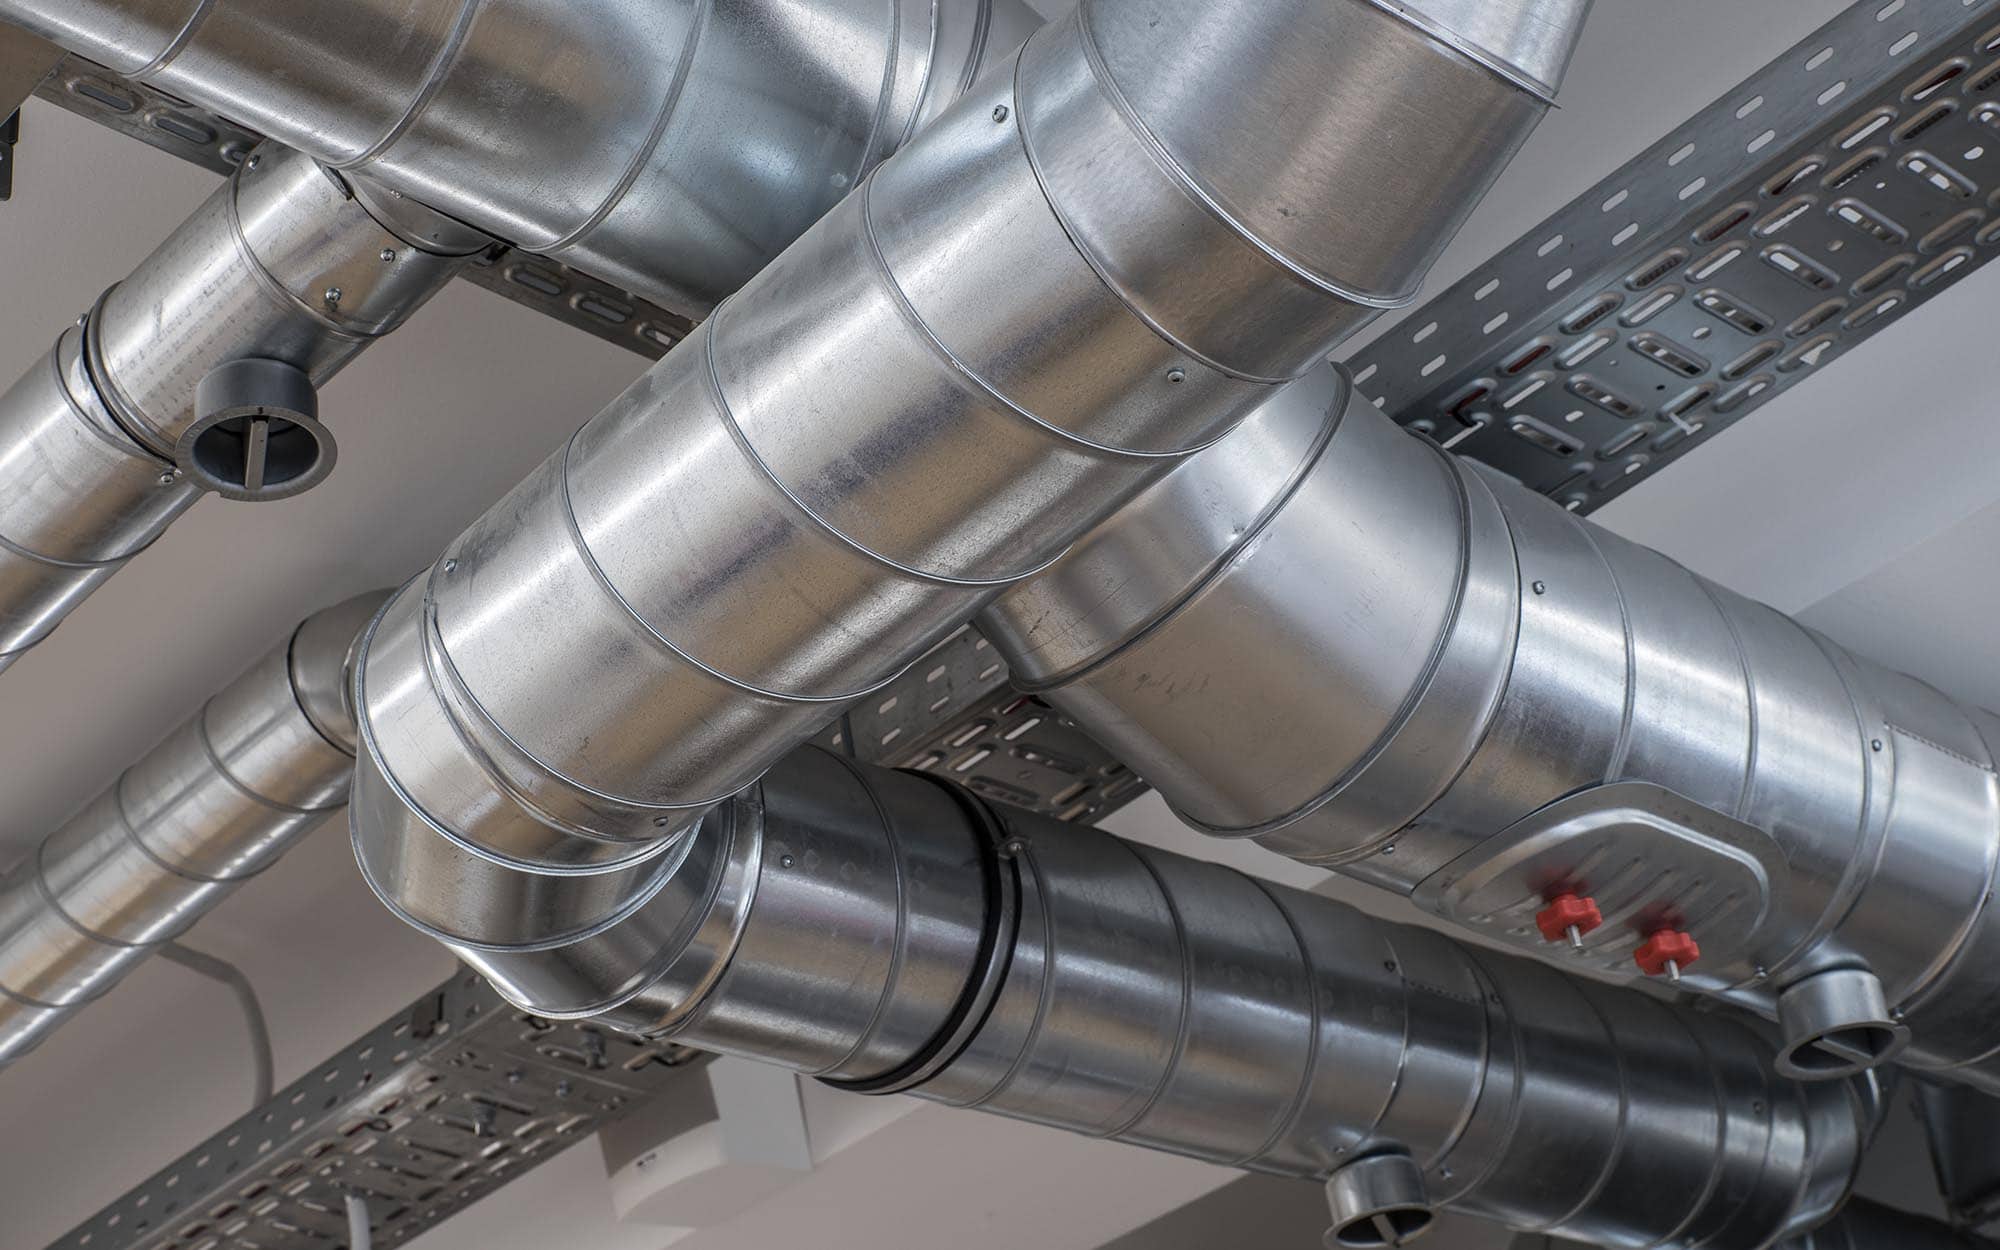 Ventilation pipe system in kitchen interior